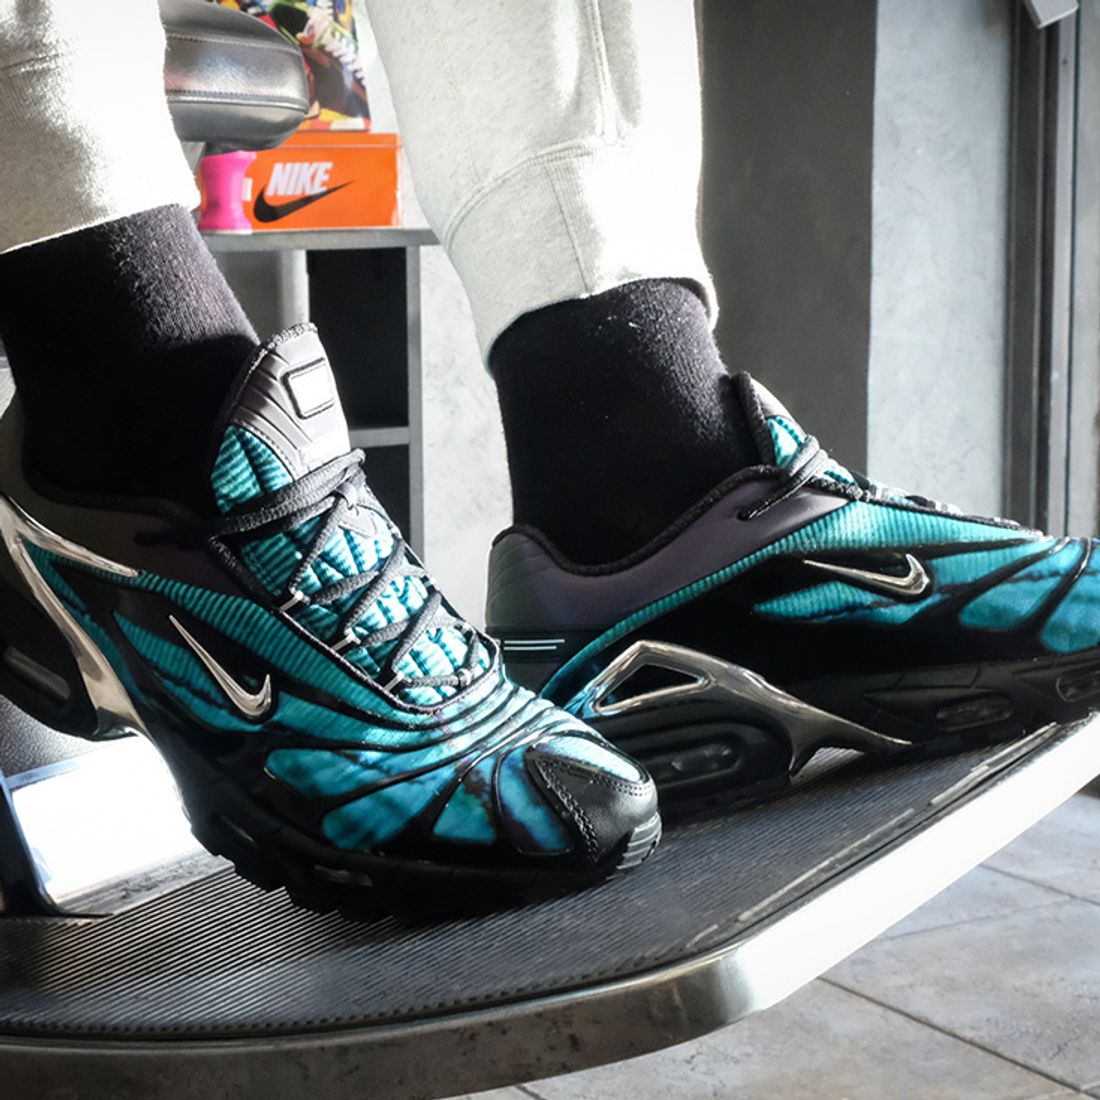 Urbanstar Roma Snap The Skepta X Nike Air Max Tailwind 5 On Foot Sneaker Freaker